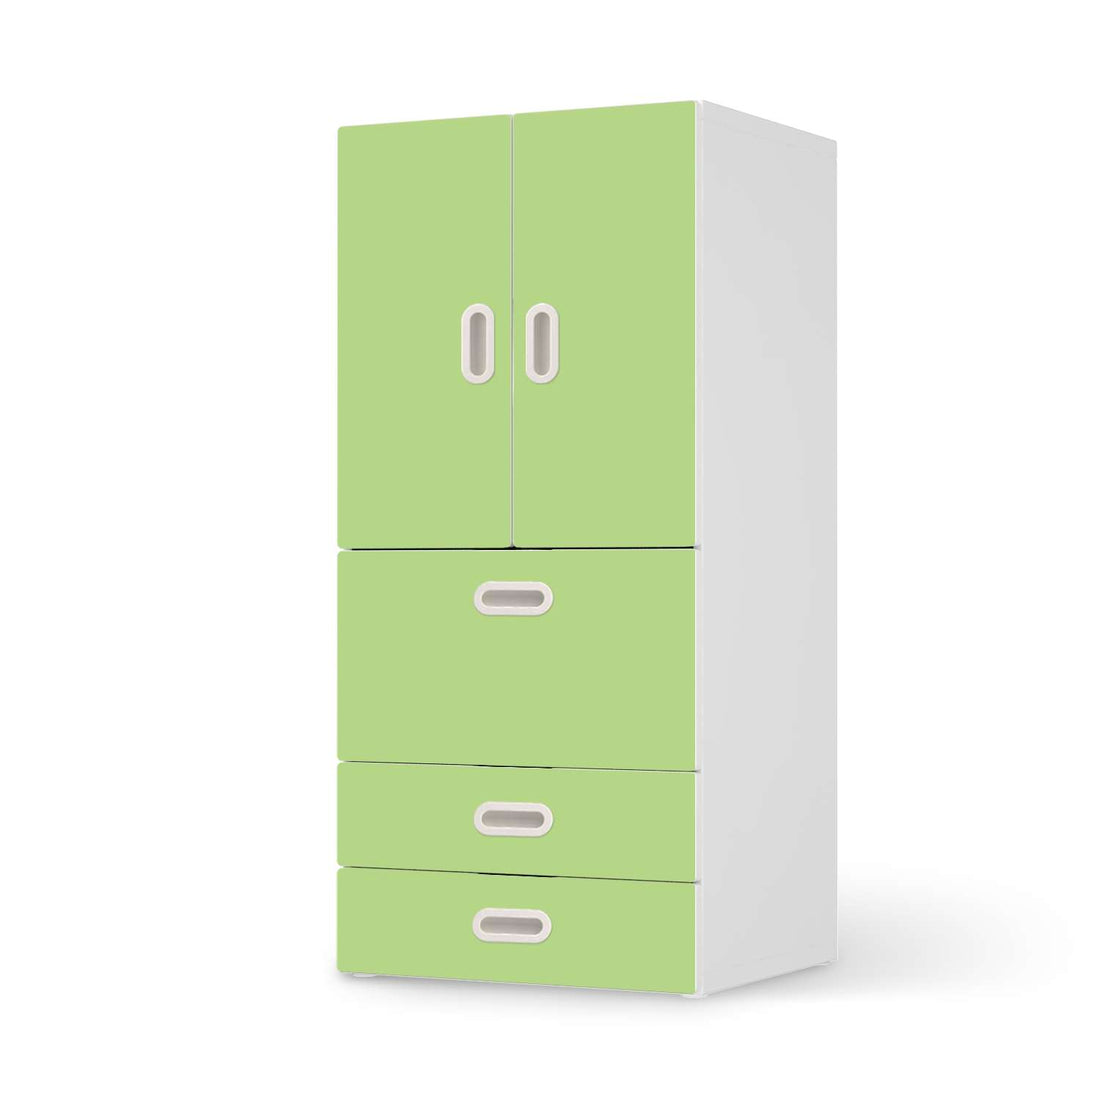 Möbelfolie Hellgrün Light - IKEA Stuva / Fritids kombiniert - 3 Schubladen und 2 kleine Türen  - weiss